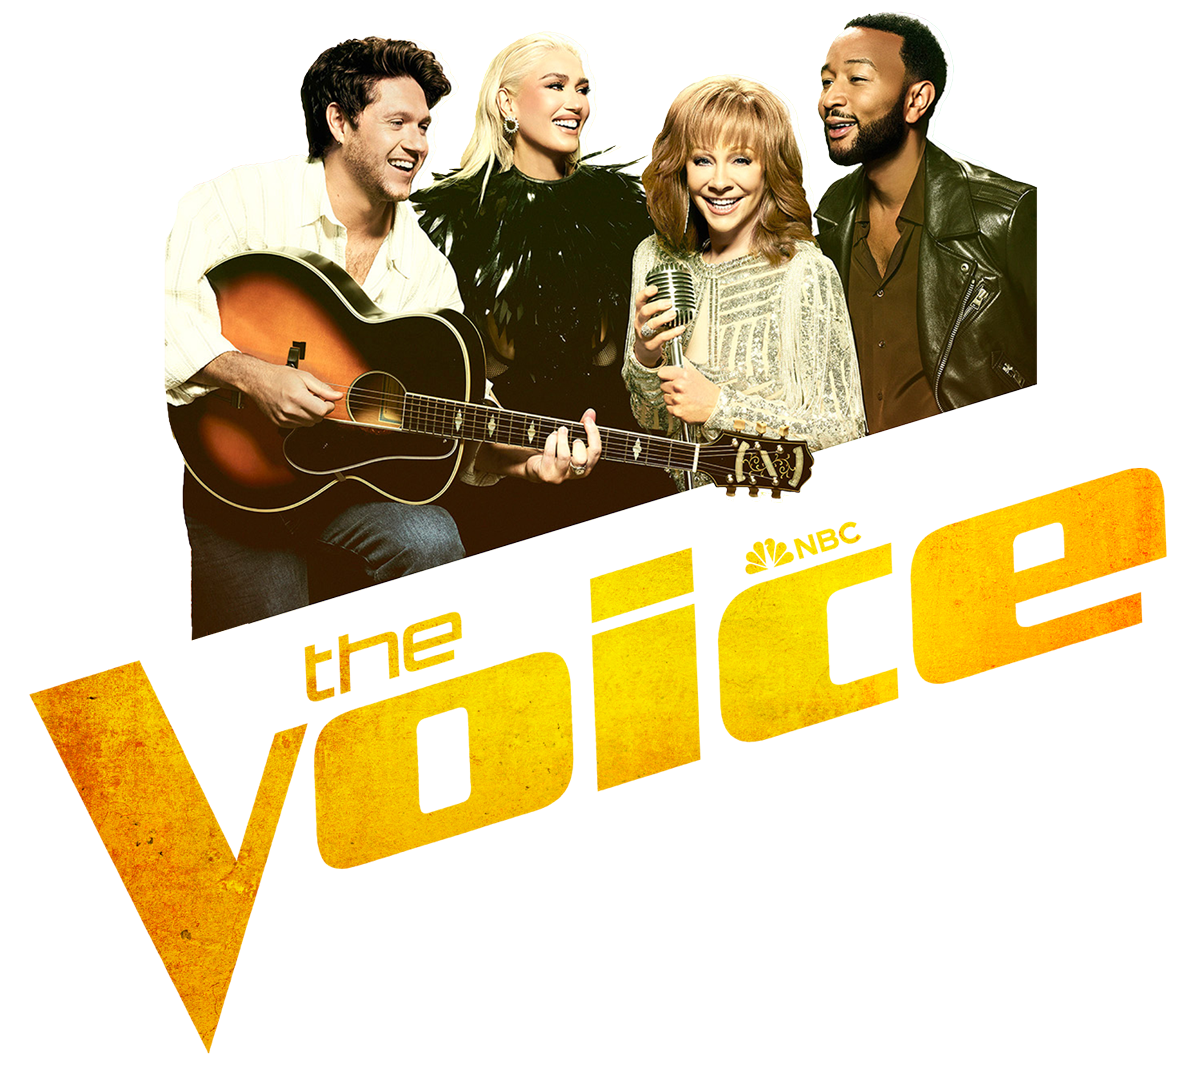 The Voice Casting Site: Register Now